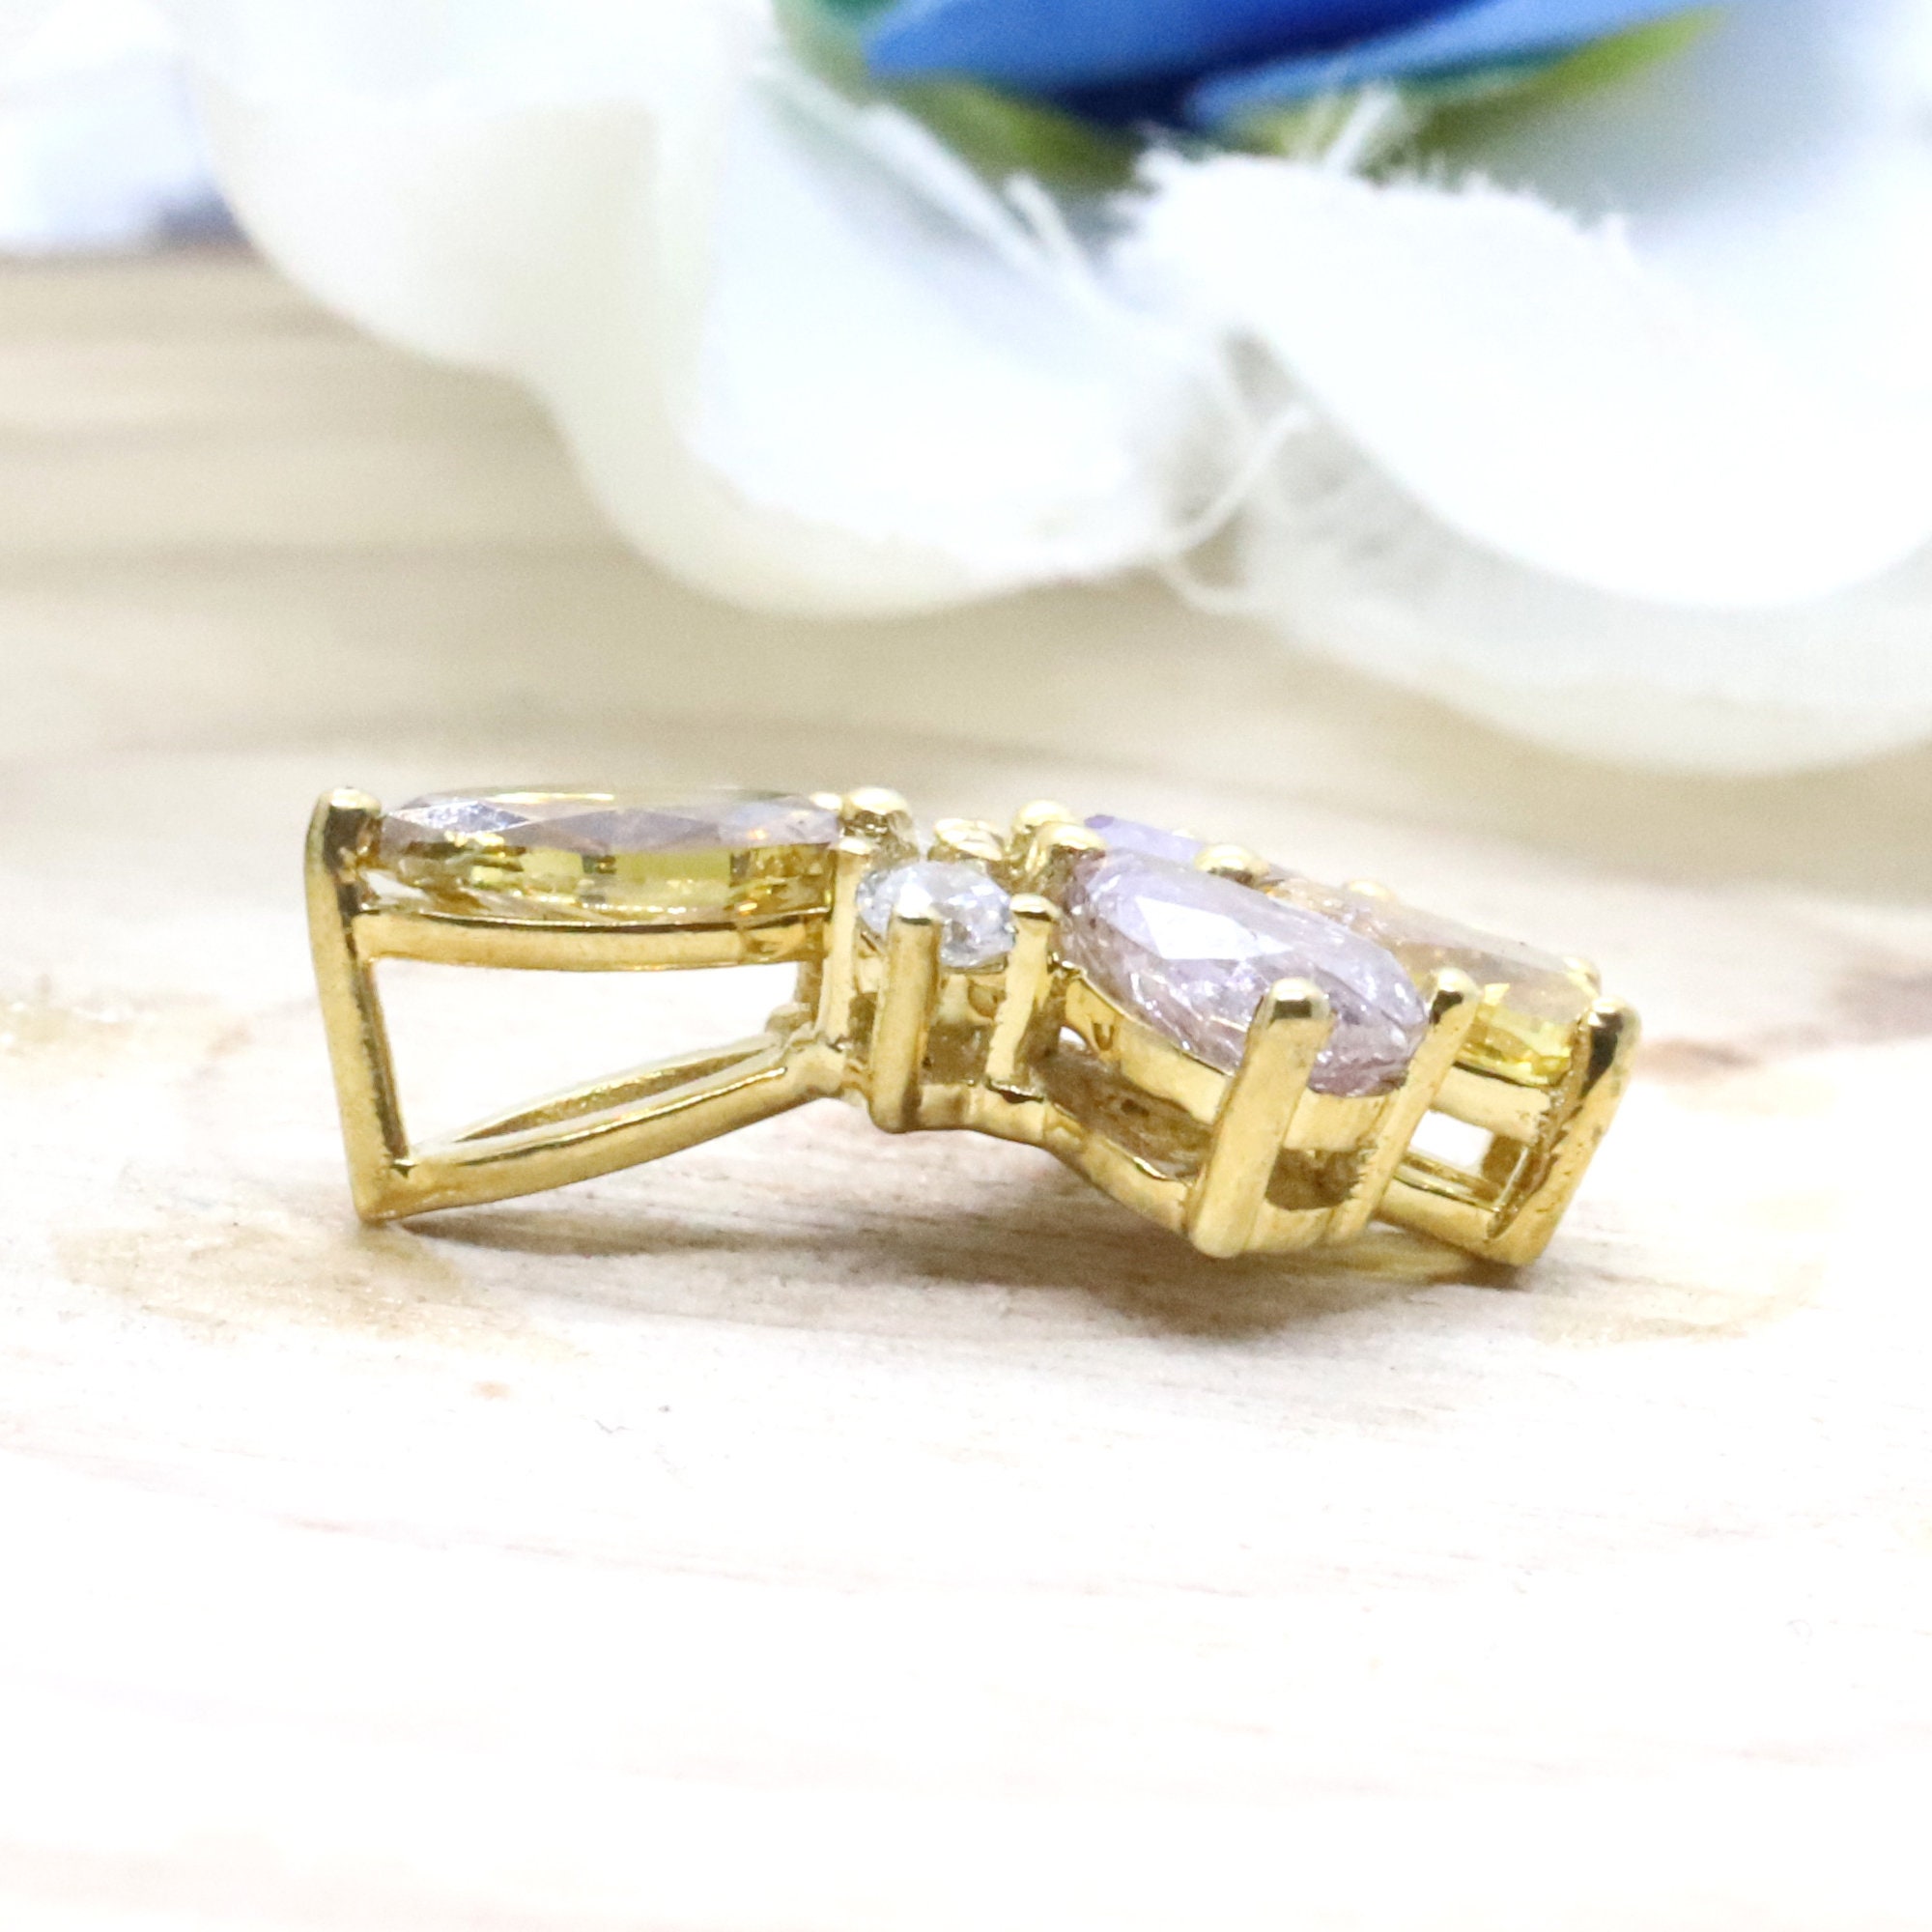 3.18 carat Pear Shape & Pink Diamond Pendant Necklace — Shreve, Crump & Low